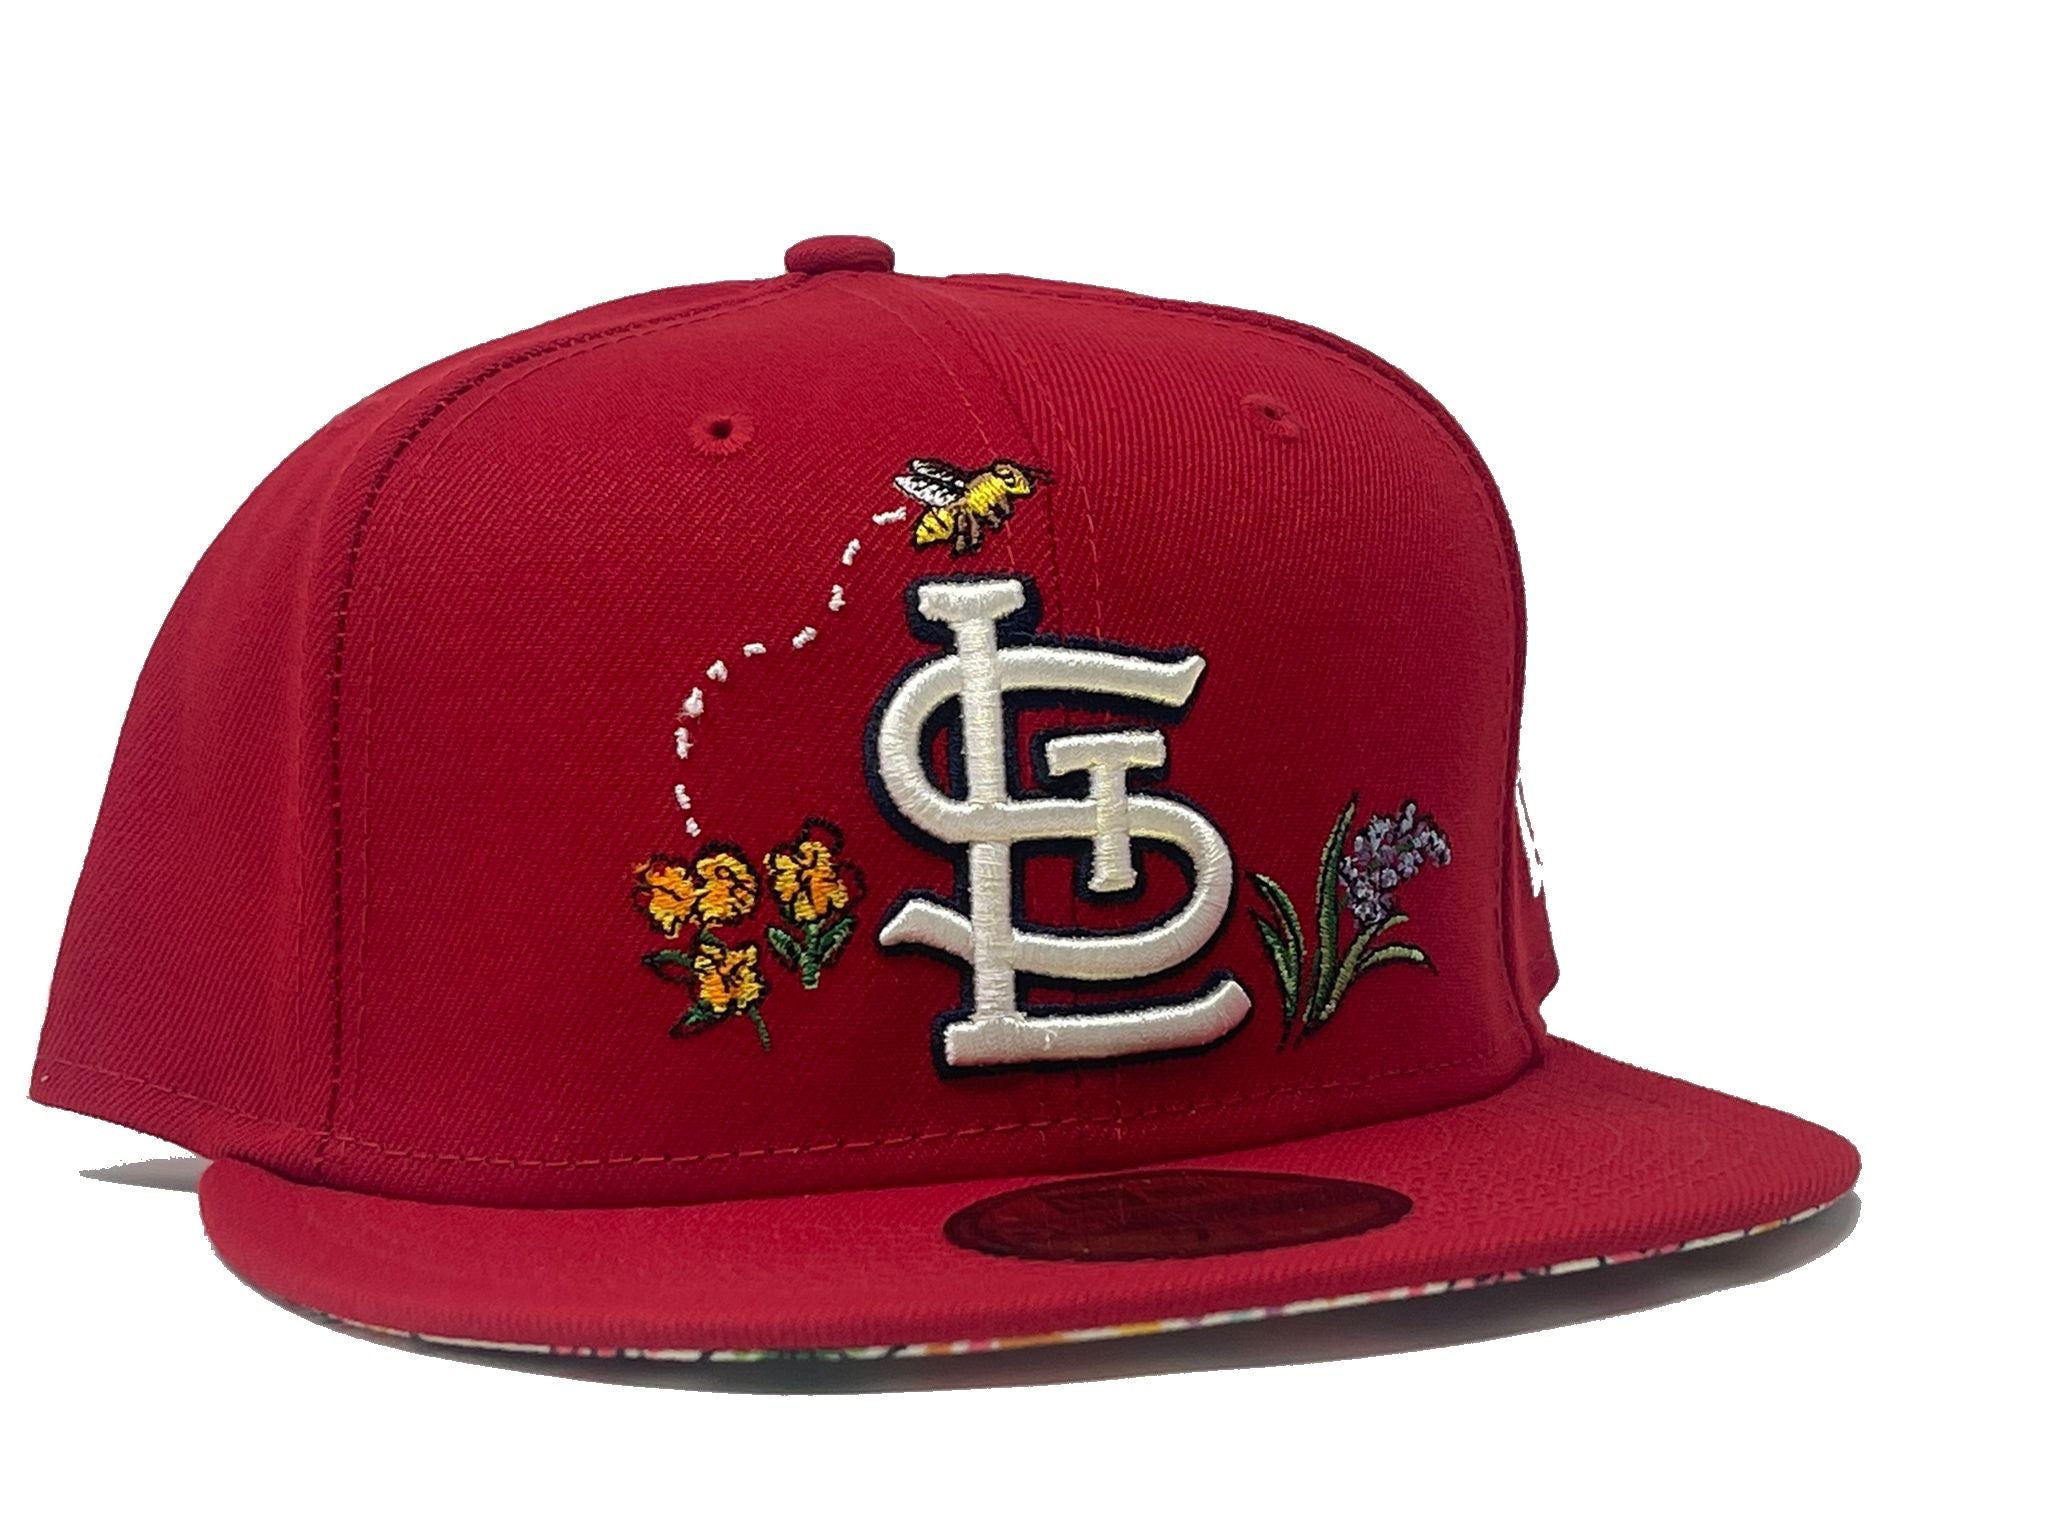 St. Louis Cardinals Spring Training Cap Pink Logo Red Hat Strapback Baseball